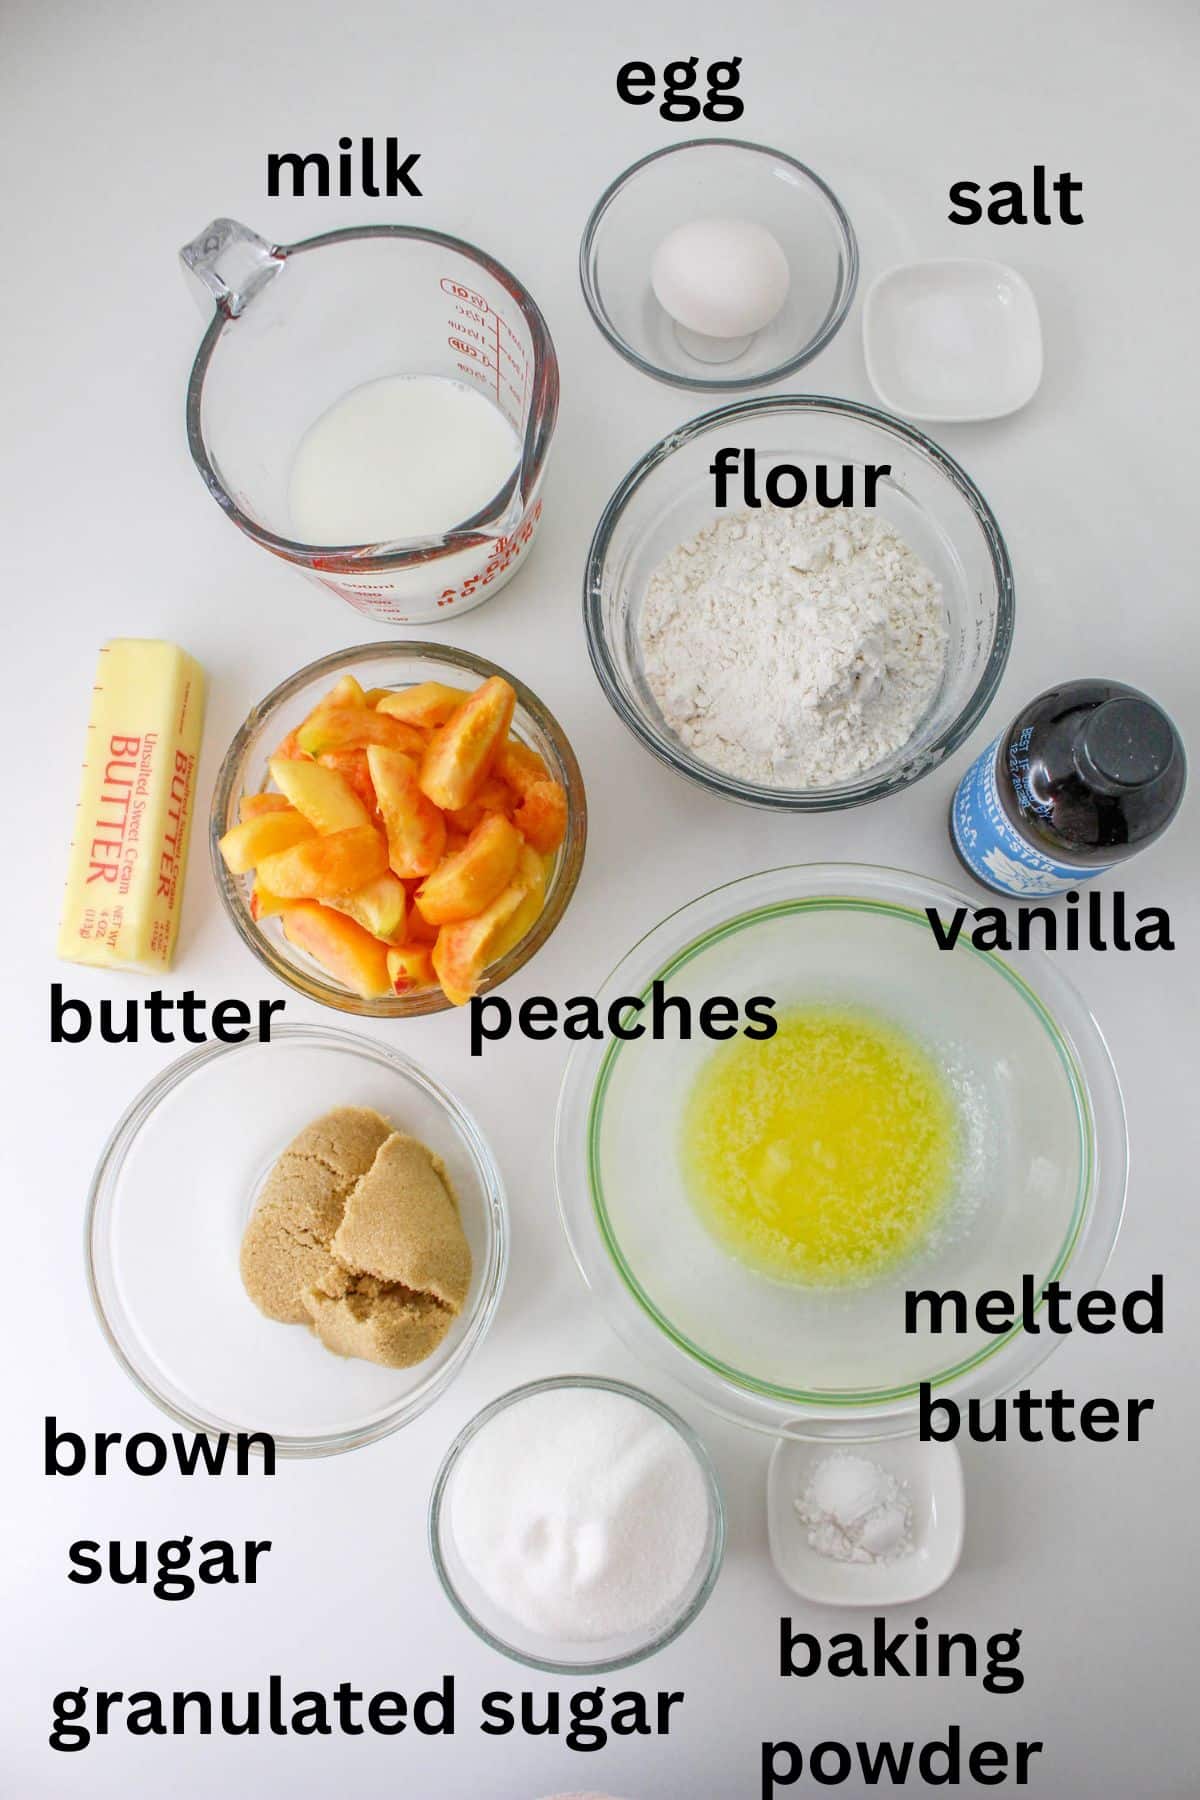 small bowls of salt, egg, milk, peaches, flour, vanilla, brown sugar, butter, granulated sugar, melted butter and baking powder